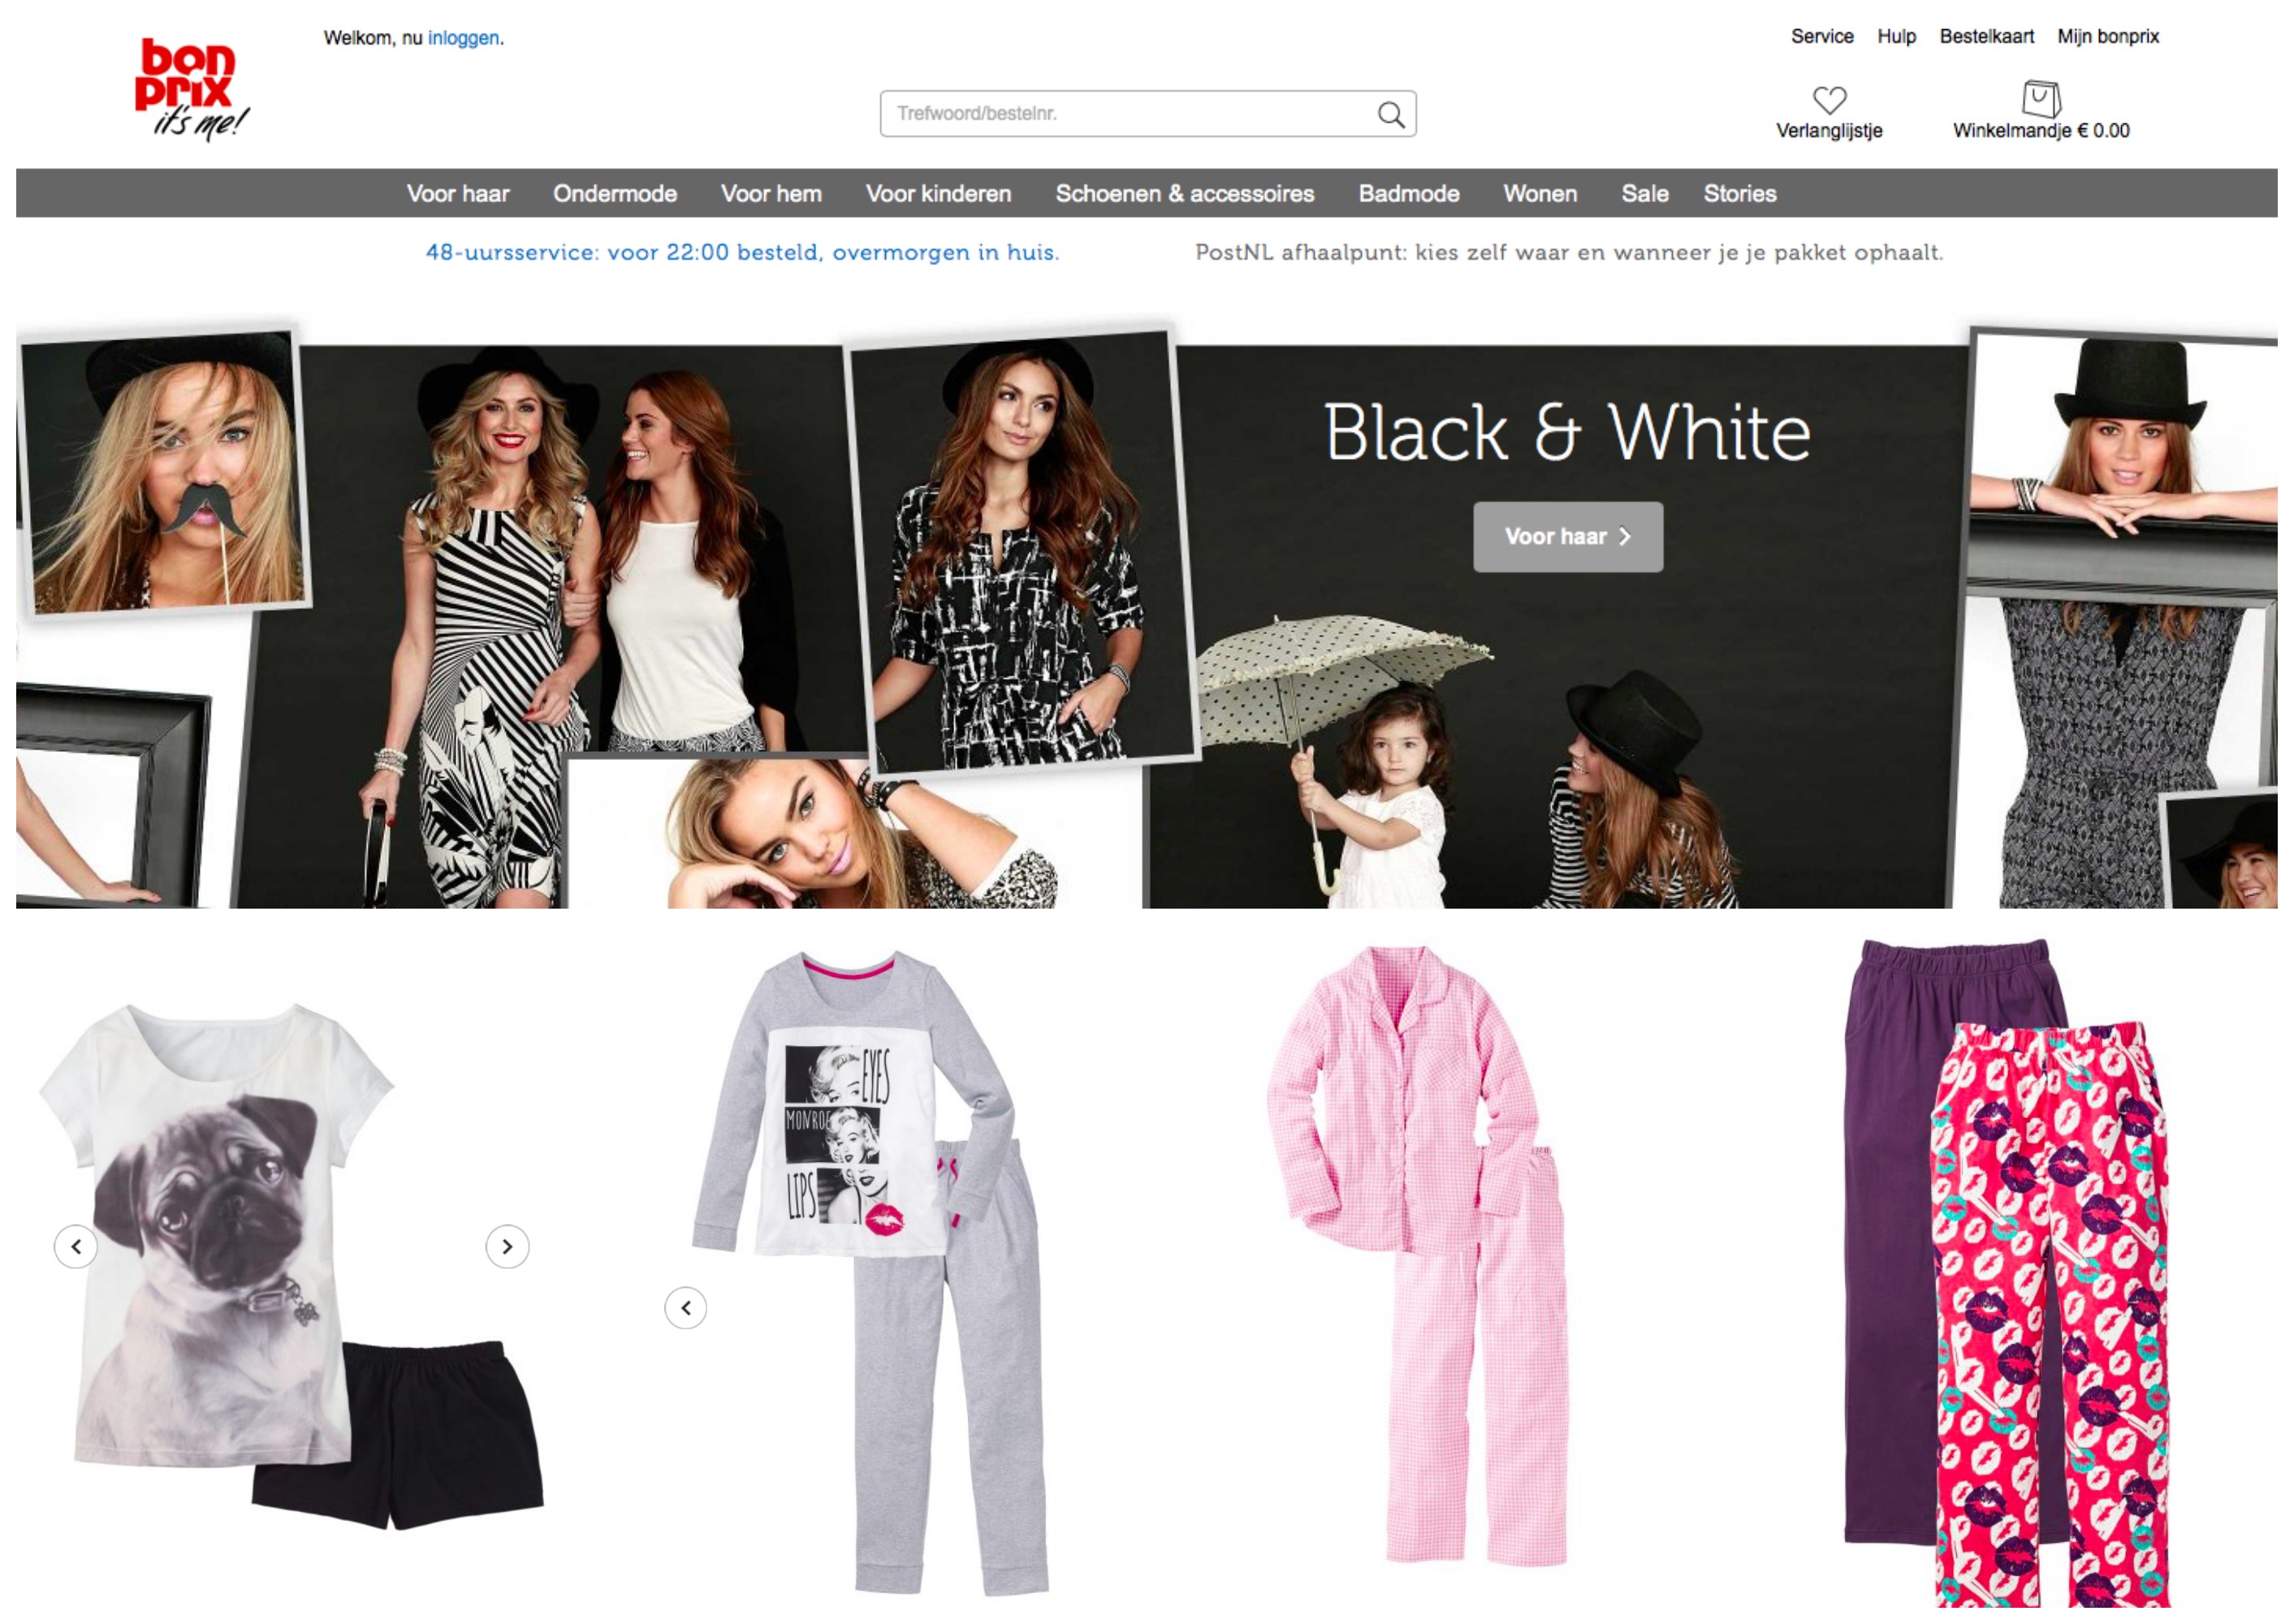 Hong Kong gips Beschikbaar mijn 5 favo online plussize kledingwinkels bonprix - The Girl in Bed